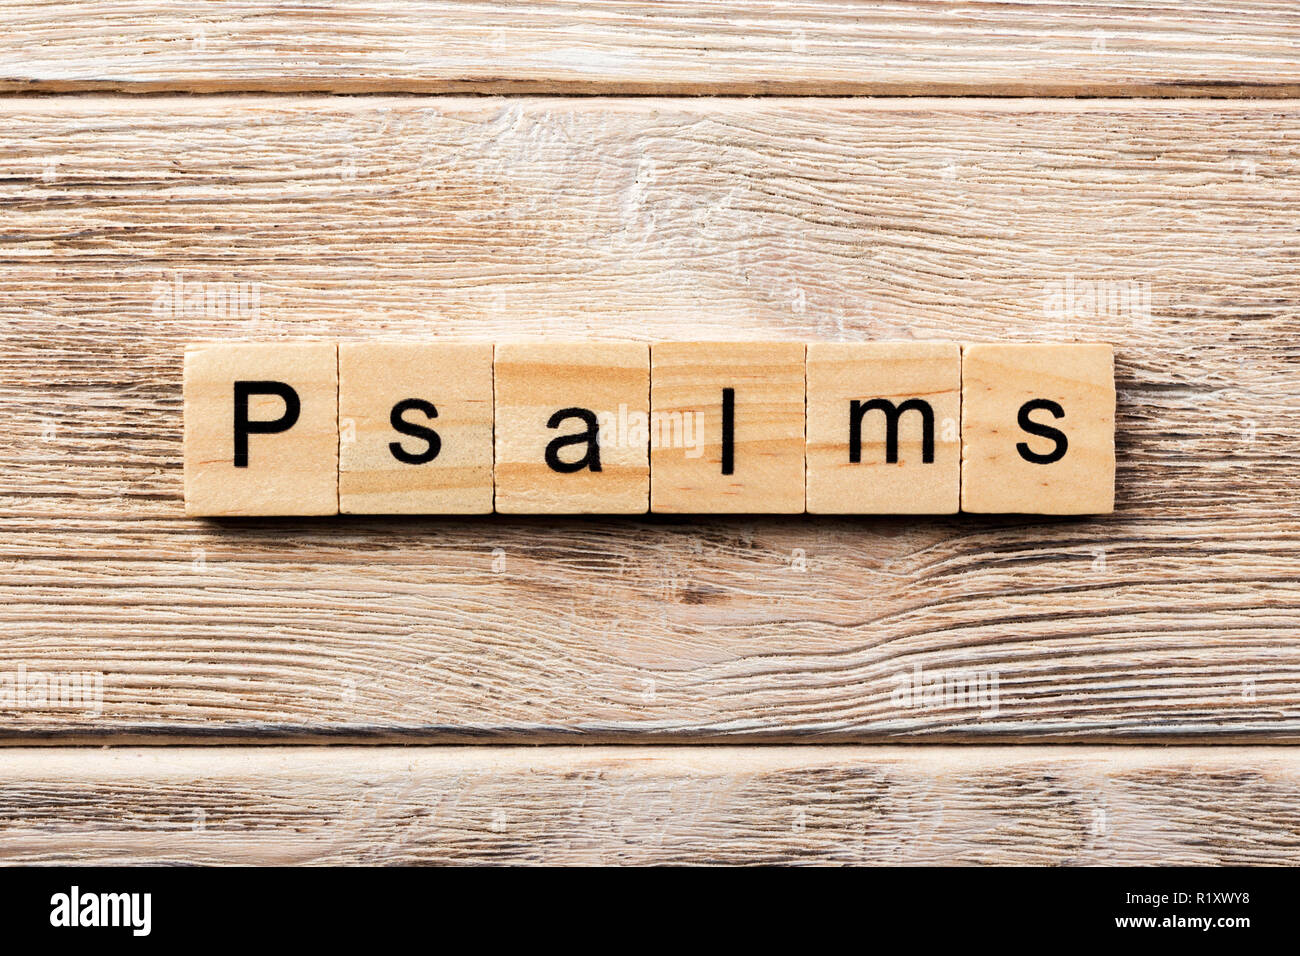 psalms word written on wood block. psalms text on table, concept. Stock Photo